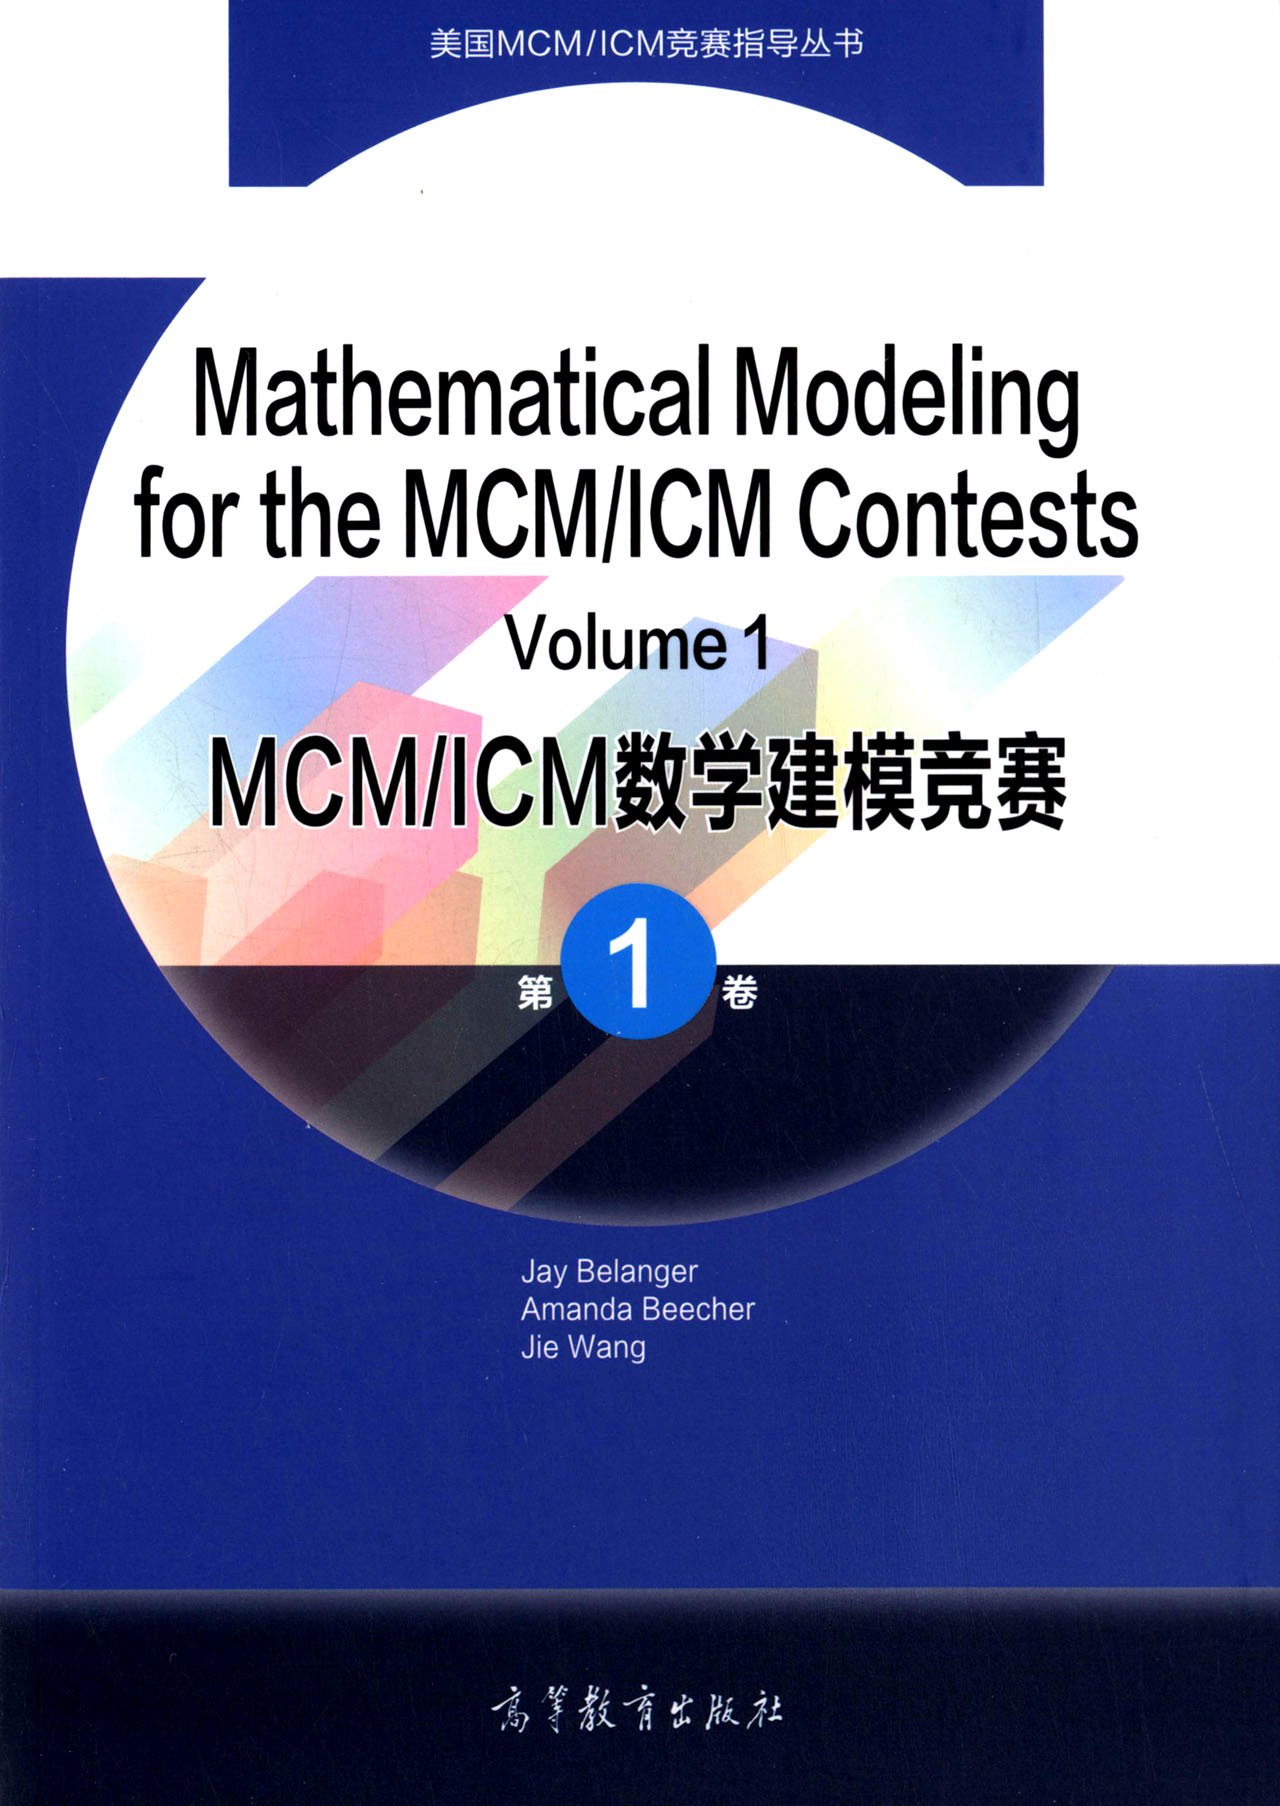 HiMCM/MCM/ICM美国数学建模